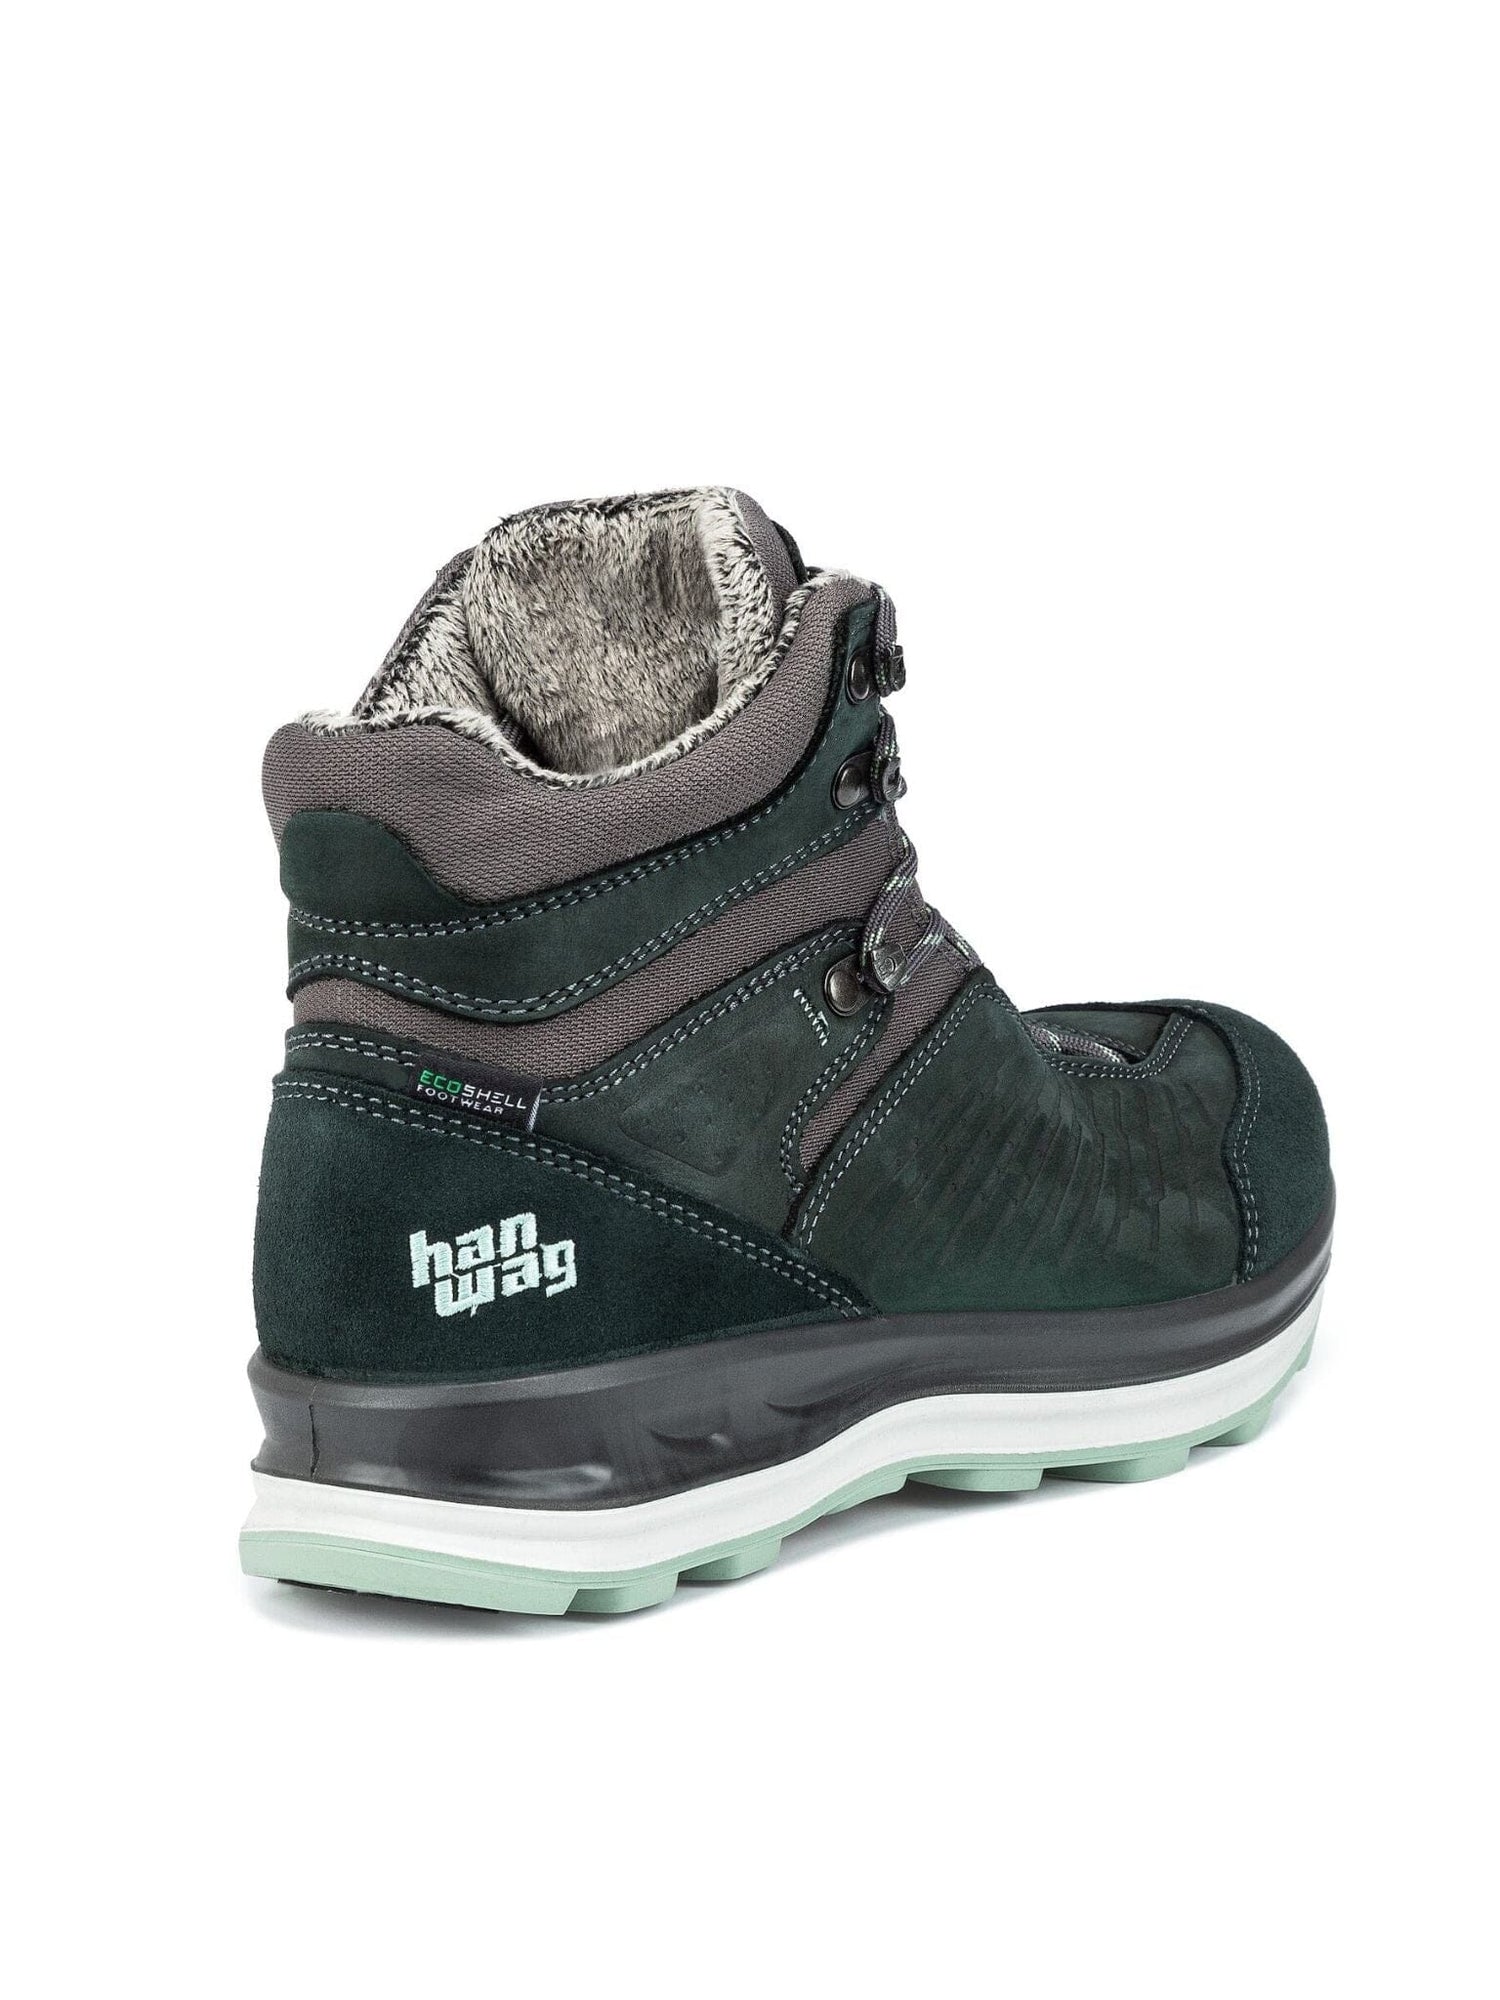 Hanwag W's Bluestrait Mid ES Winter Shoes - OEKO-TEX Certified Leather Petrol/Mint Shoes